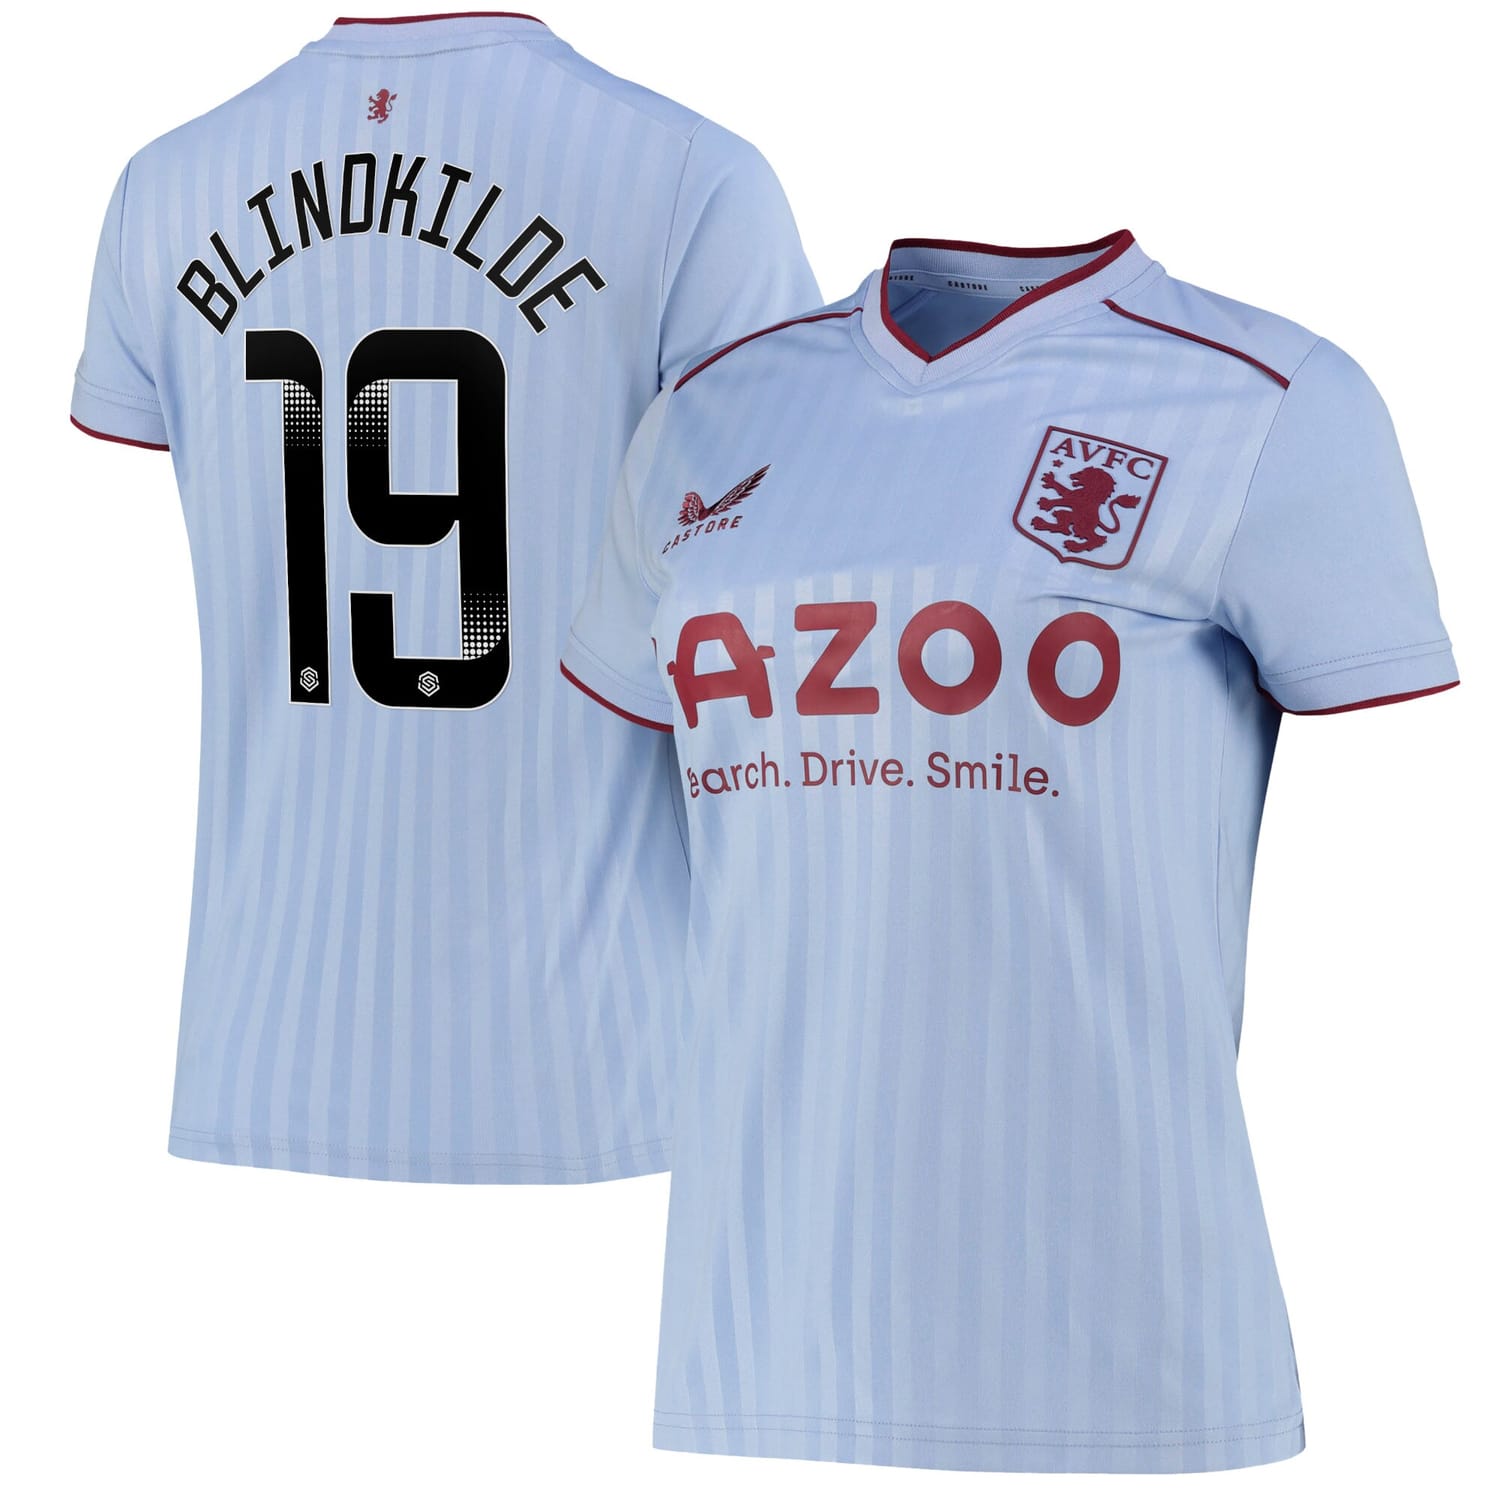 Premier League Aston Villa Away WSL Jersey Shirt 2022-23 player Laura Blindkilde 19 printing for Women